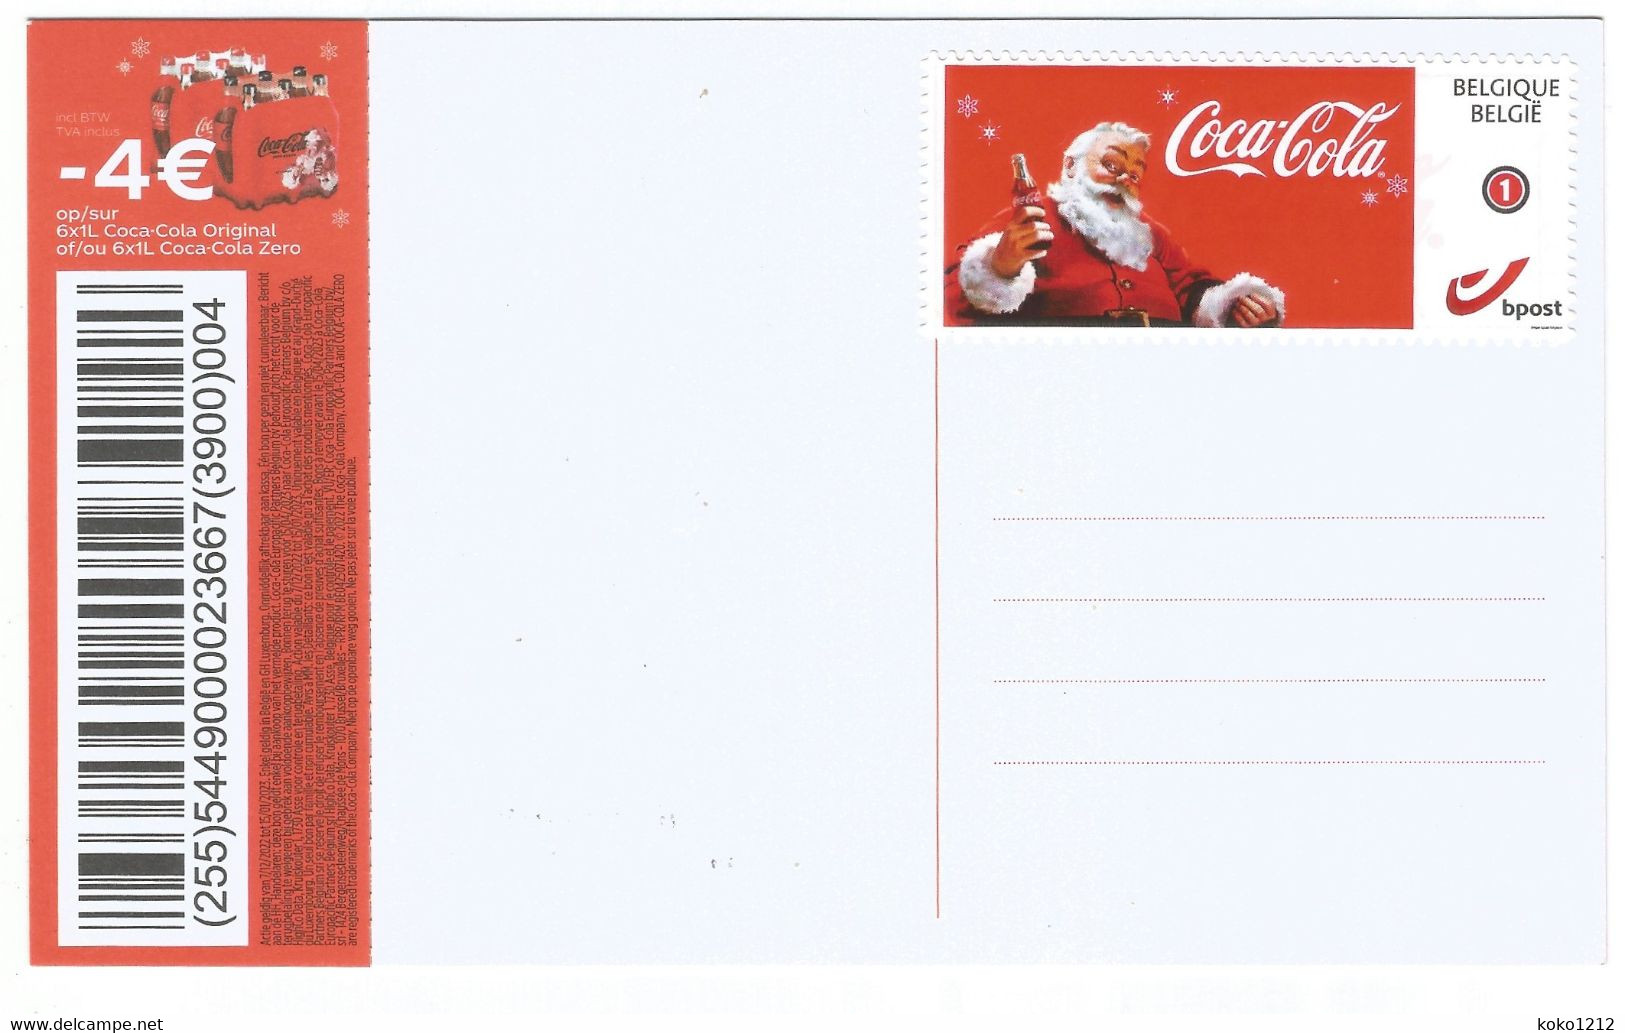 RARE CocaCola Belgium Postcard (1/2) With Private Stamp CocaCola NEUF - Postkarten